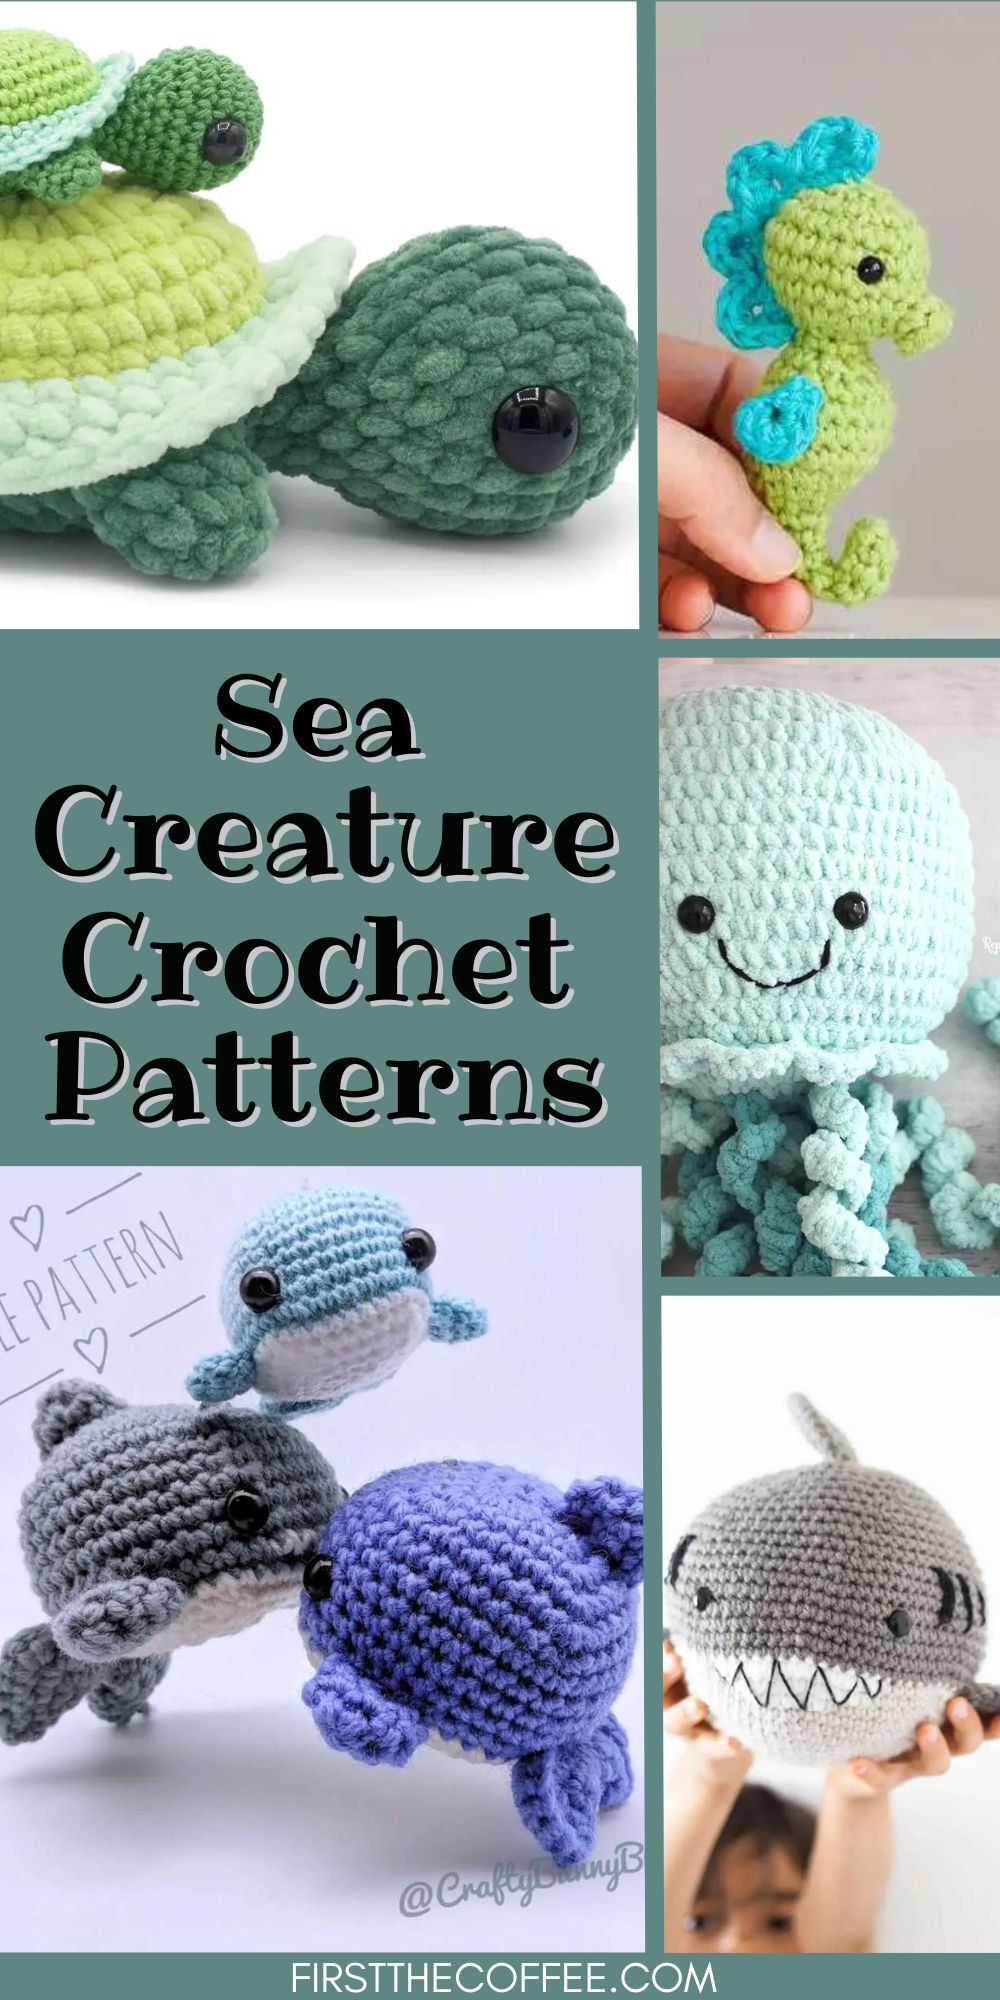 Sea Creature Crochet Patterns